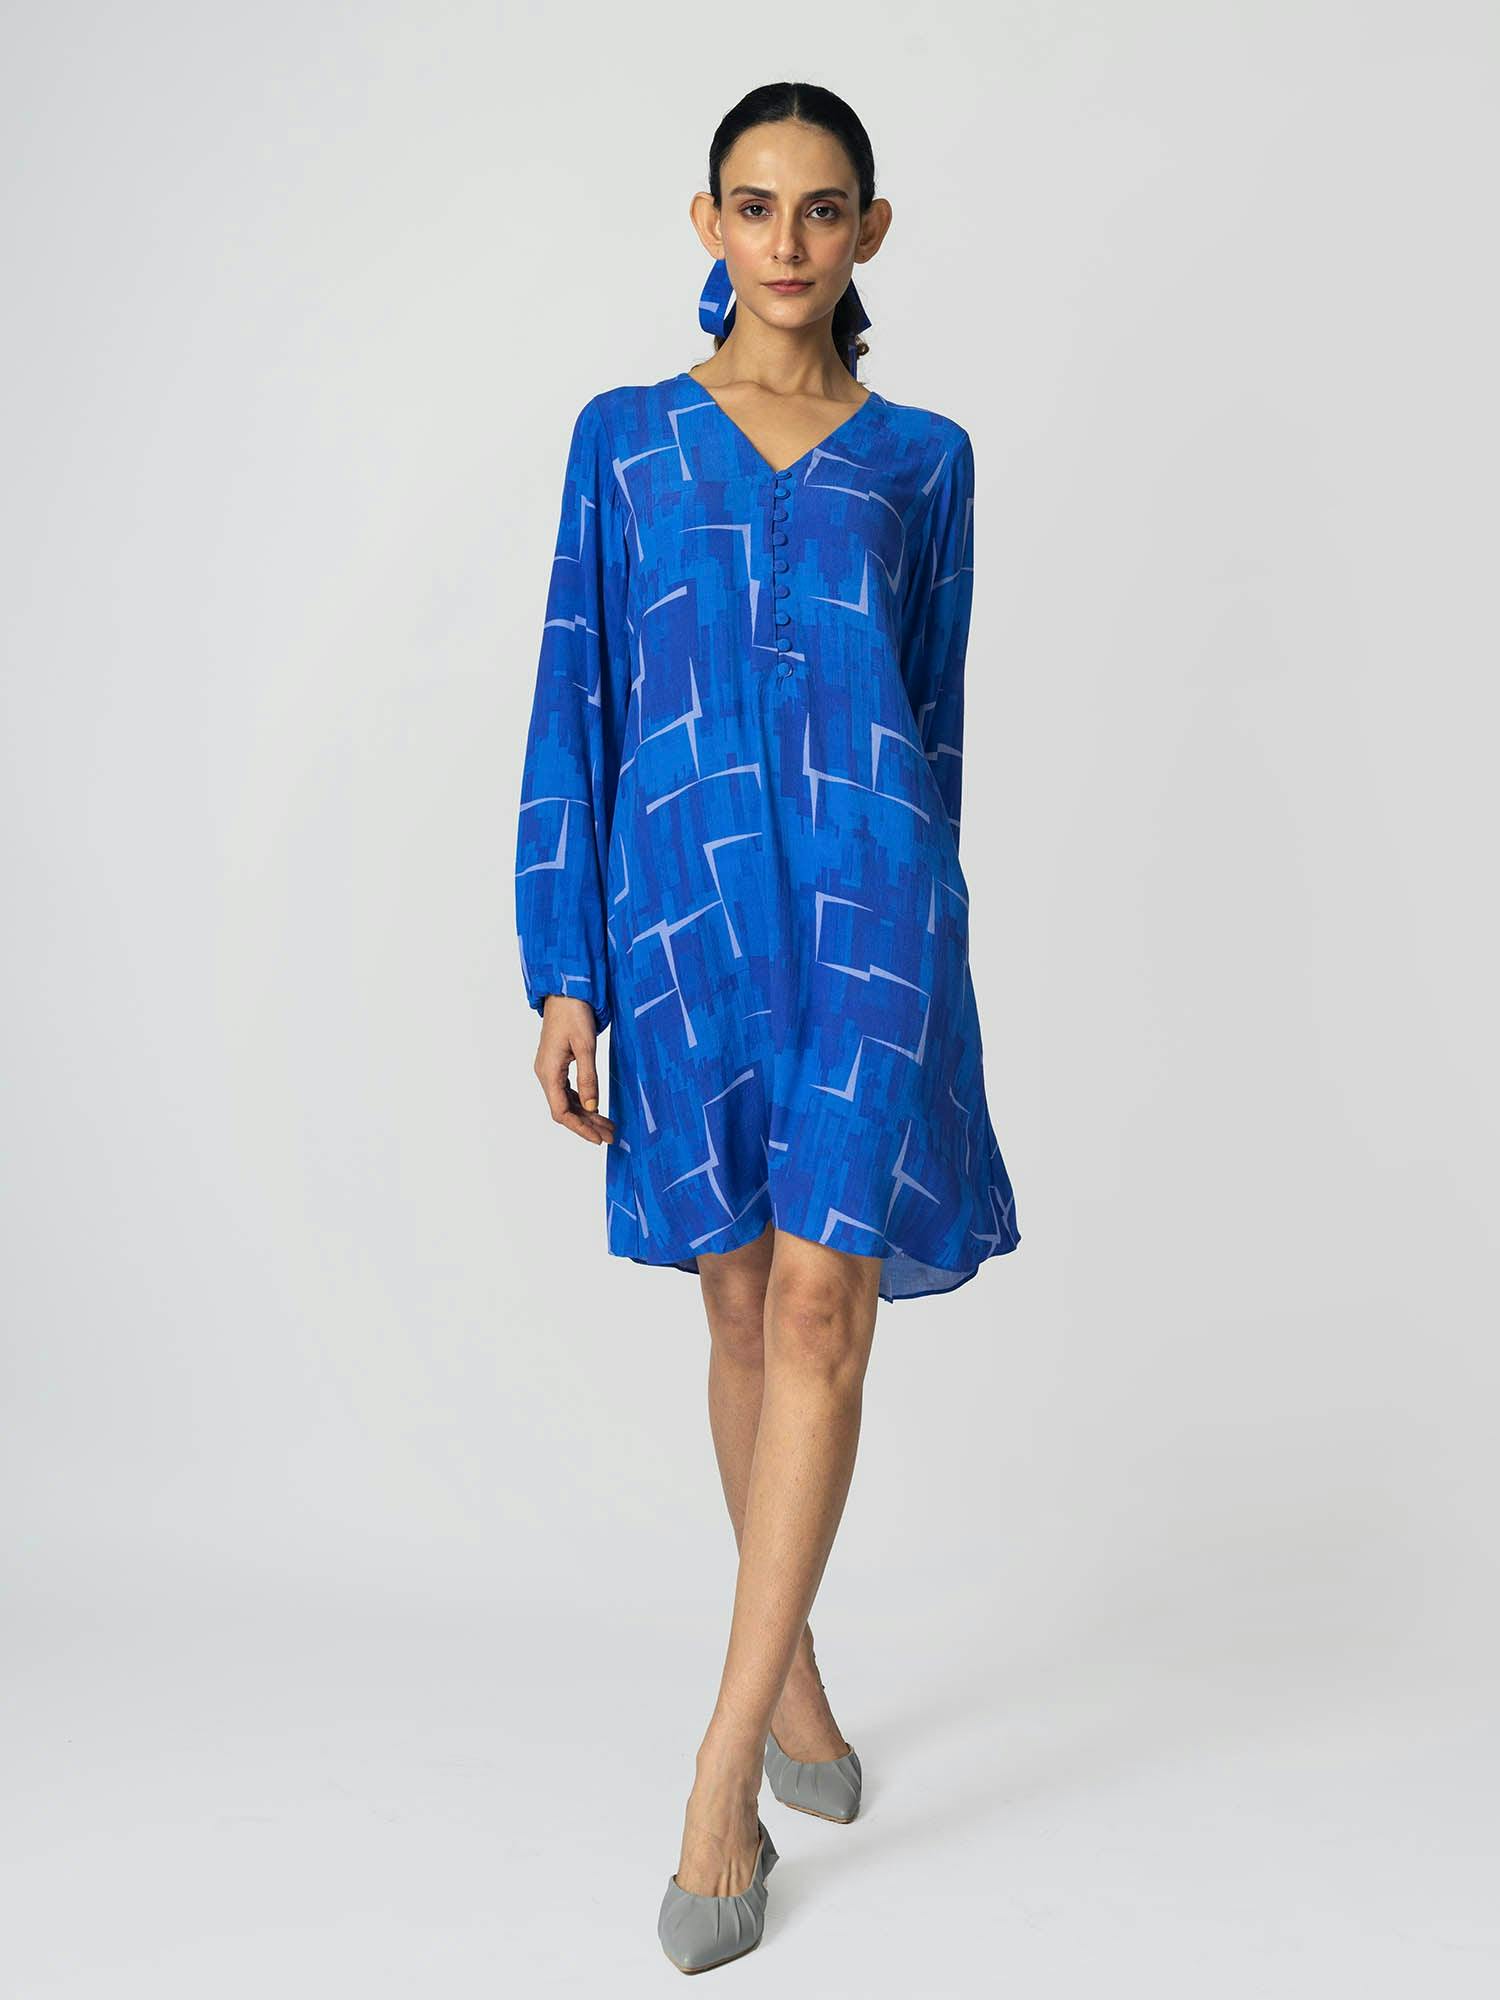 Brick Blue Shift Dress, a product by KLAD